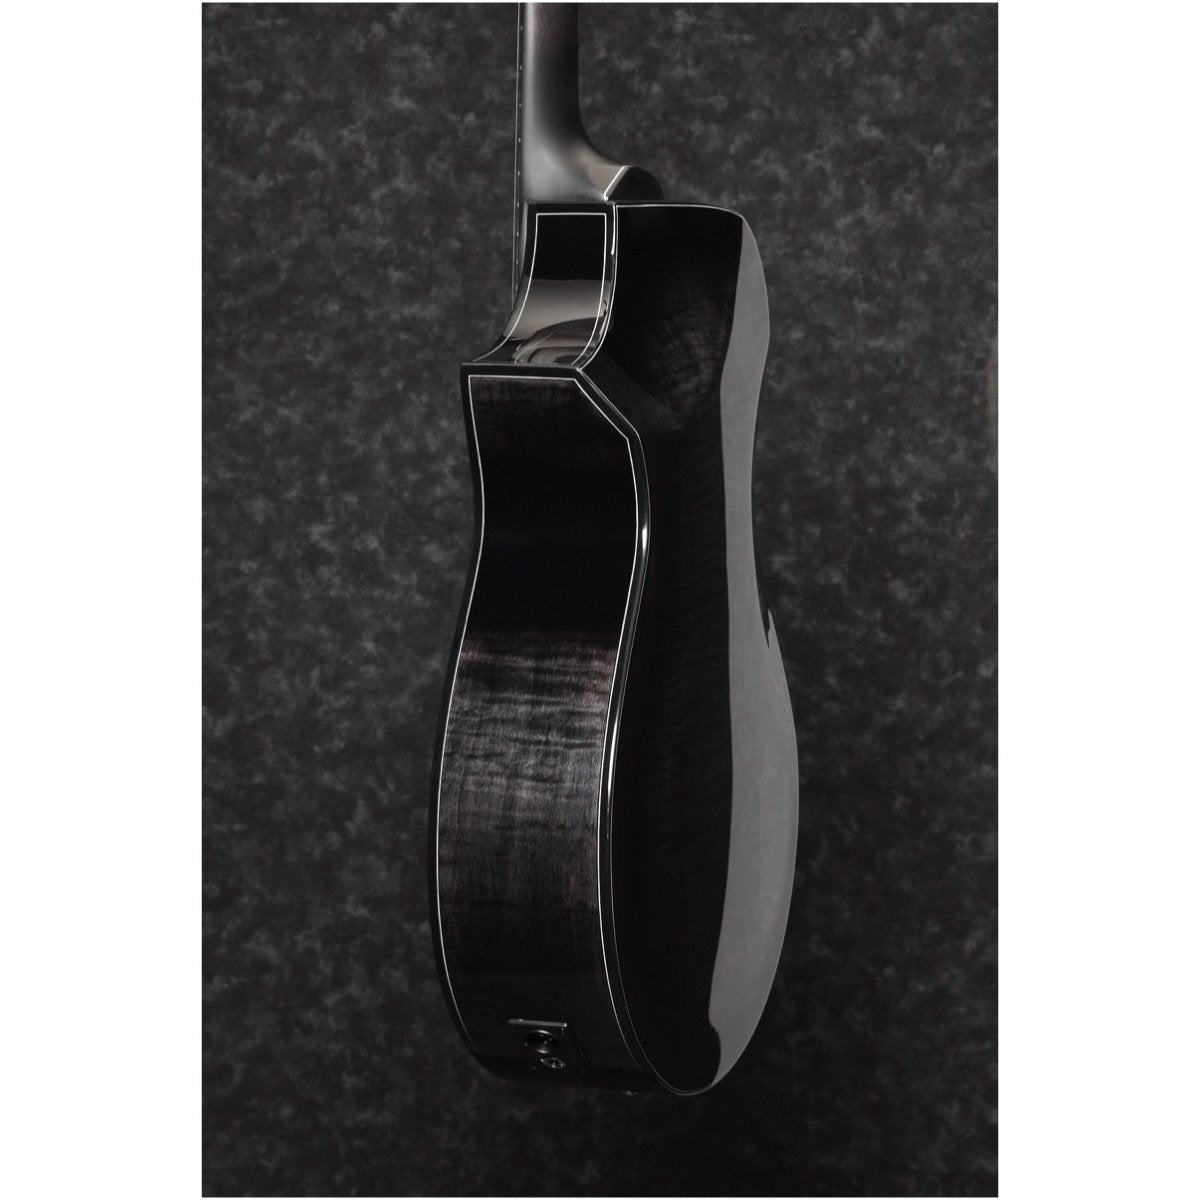 Ibanez AEWC400 Acoustic-Electric Guitar, Transparent Black Sunburst